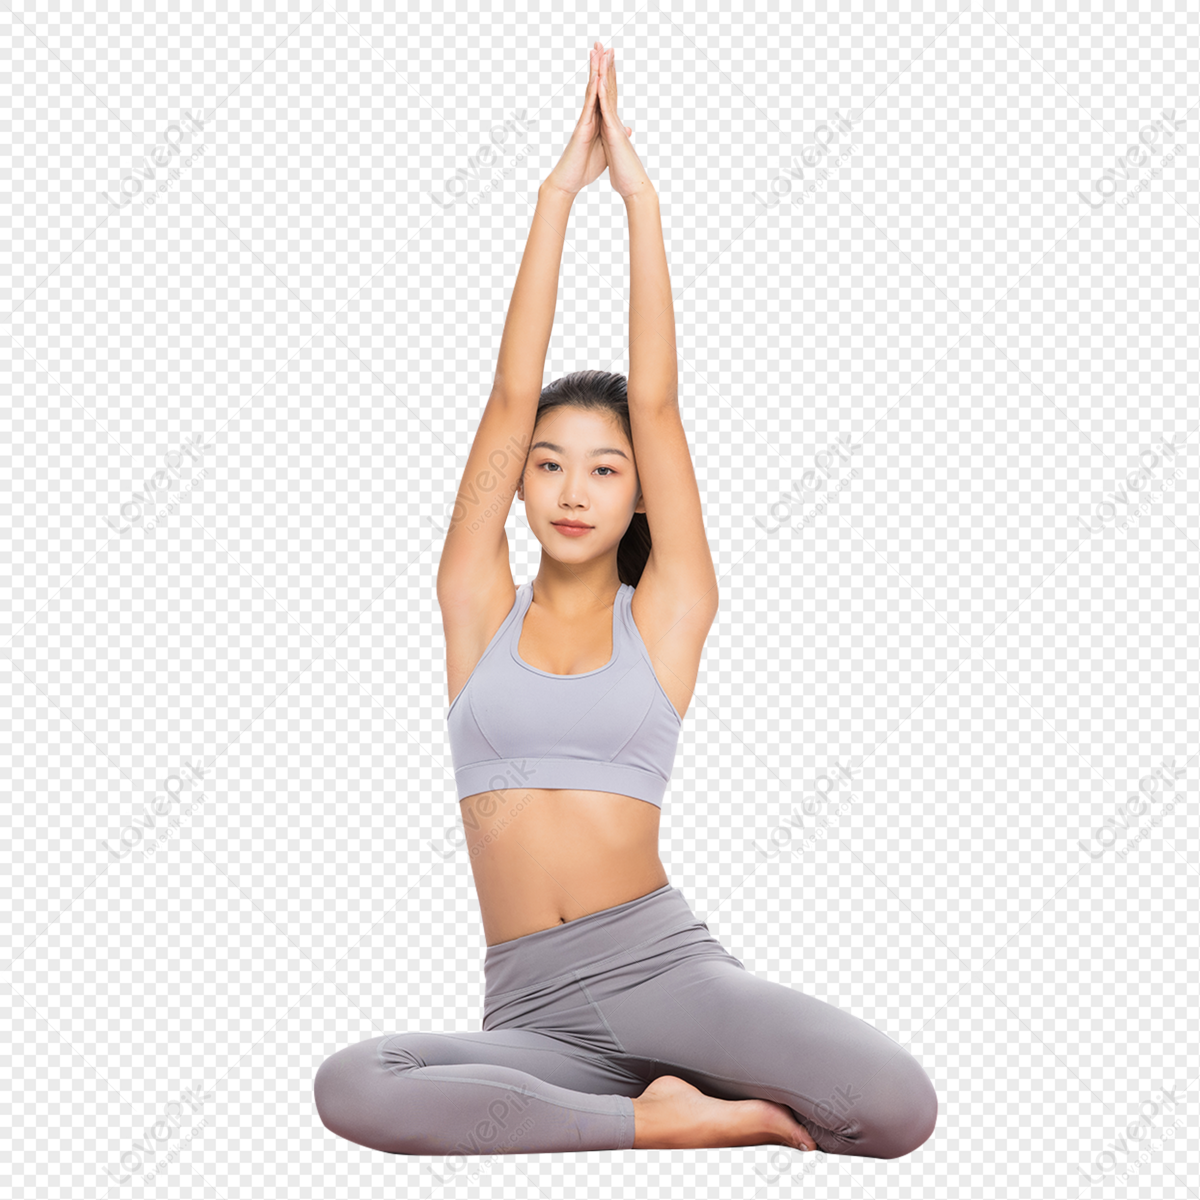 Yoga Women PNG Transparent Images Free Download